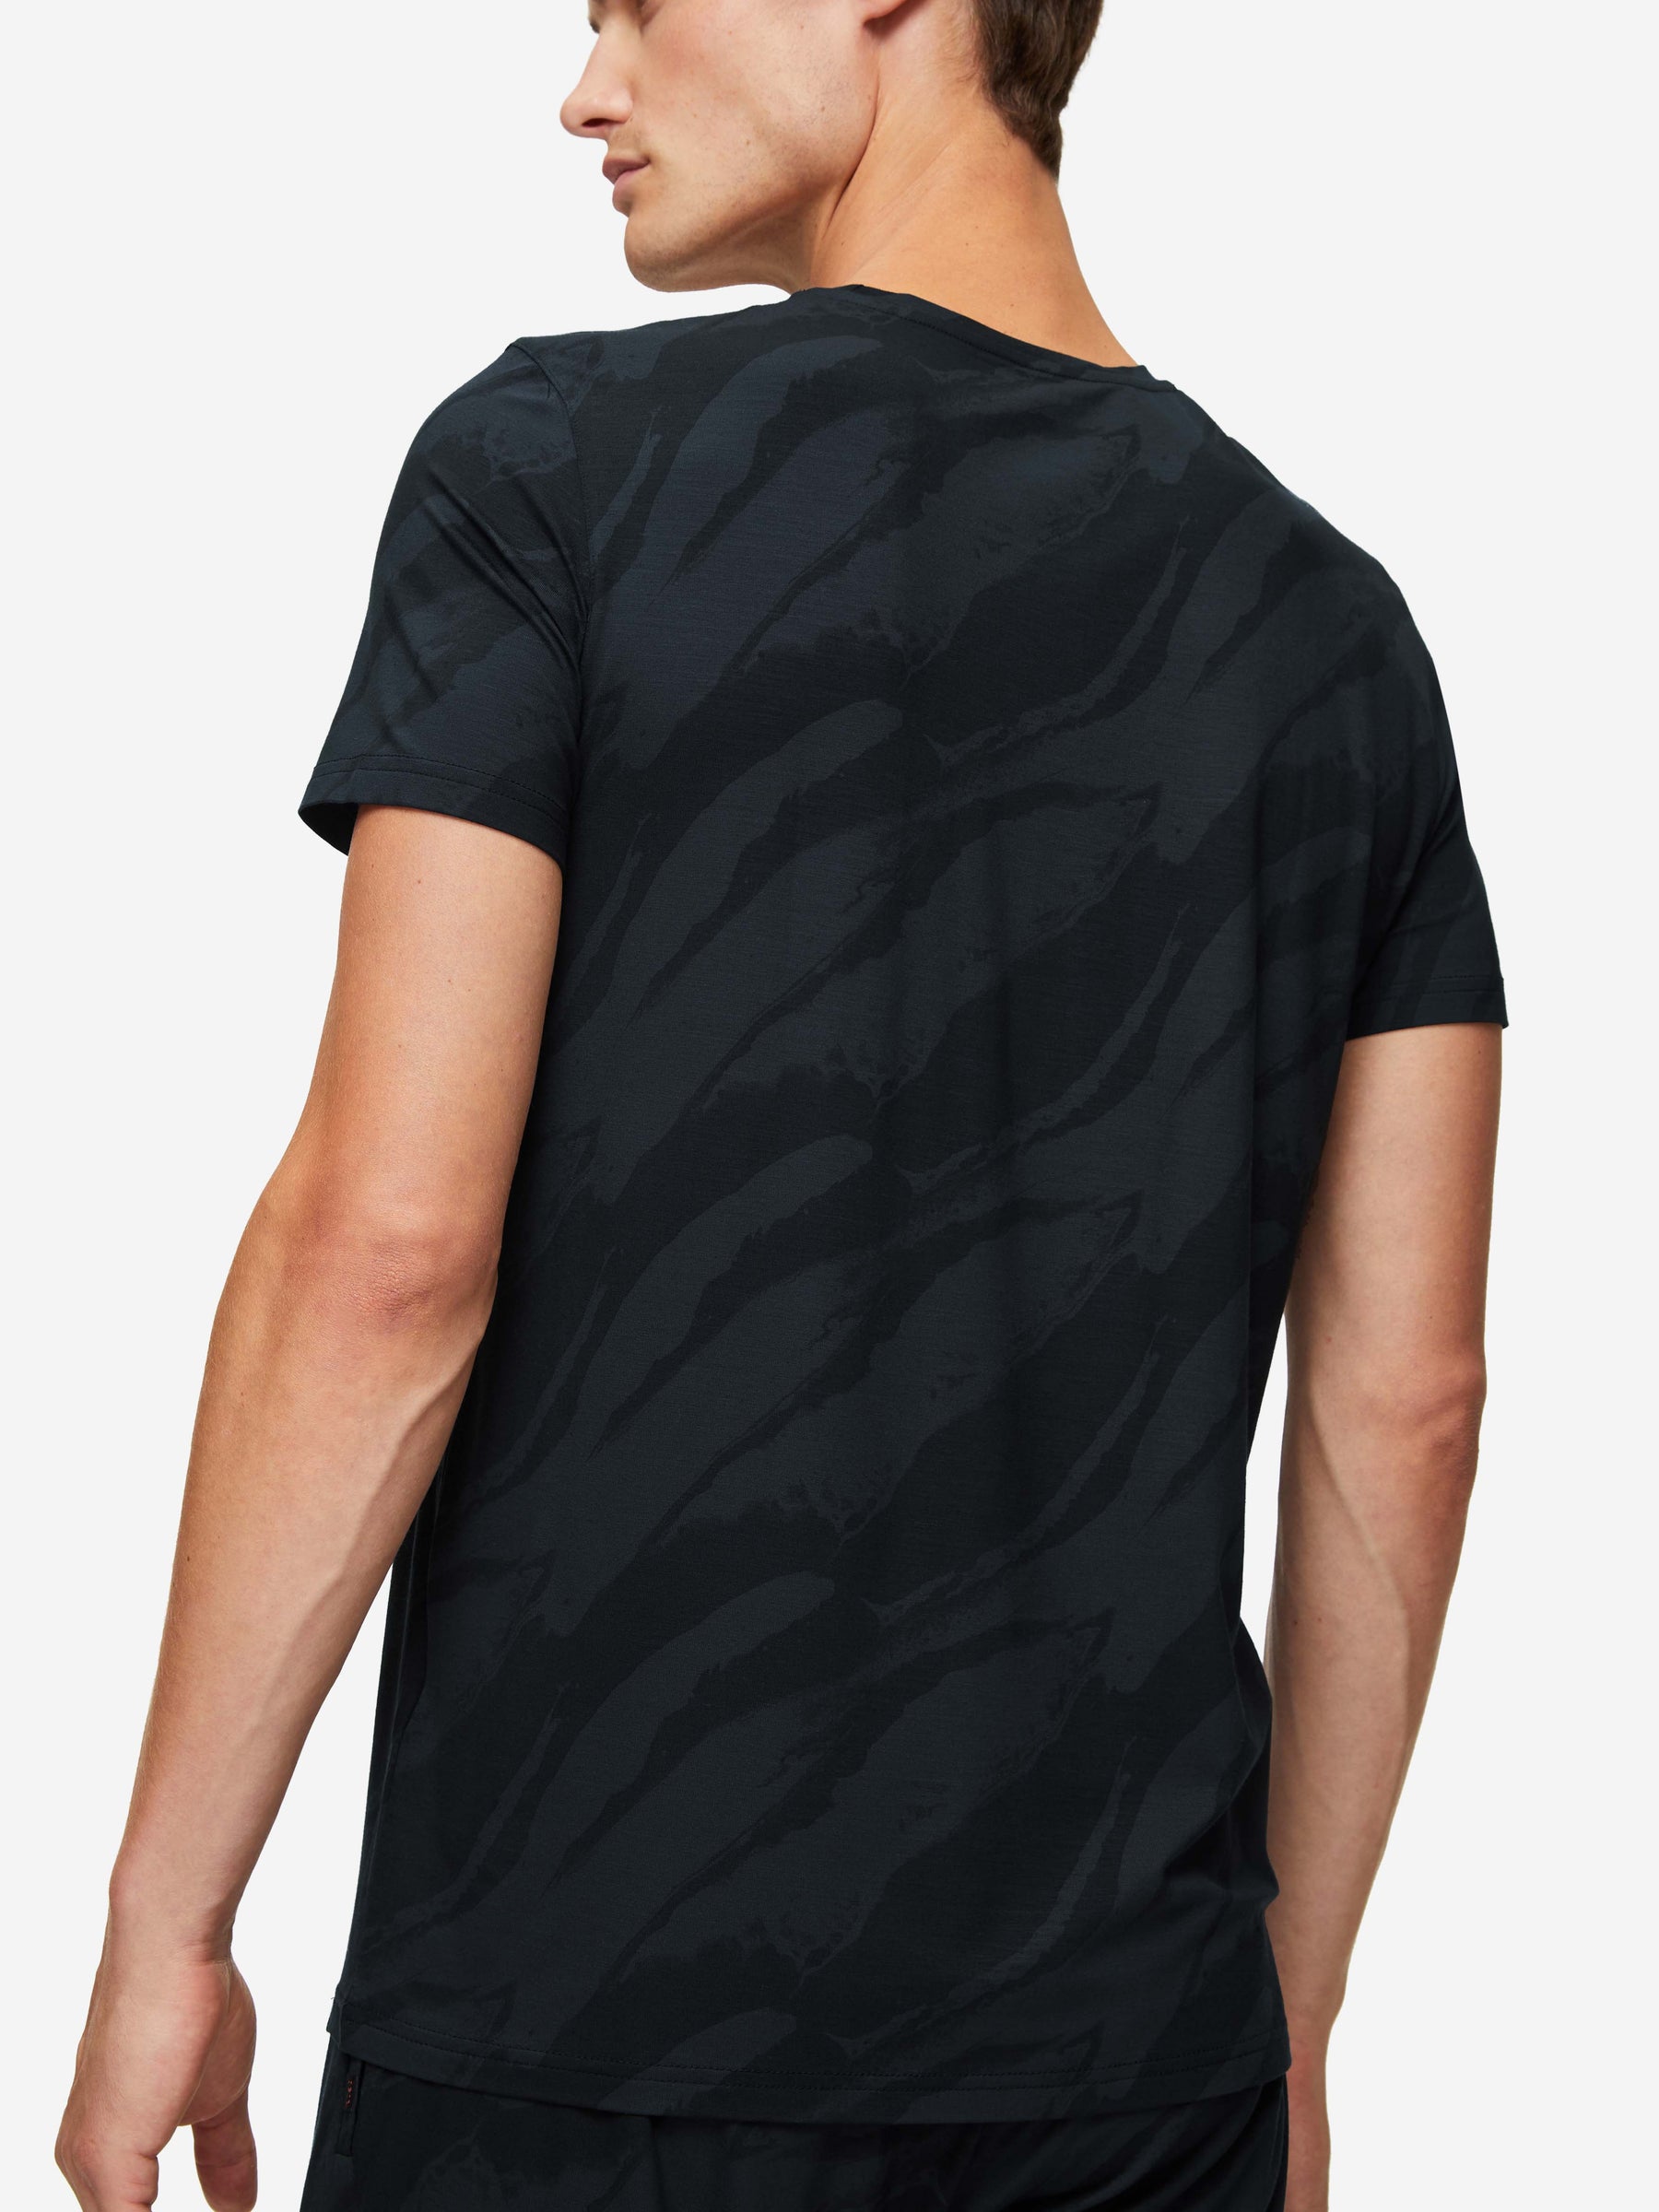 Men's T-Shirt London 8 Micro Modal Black